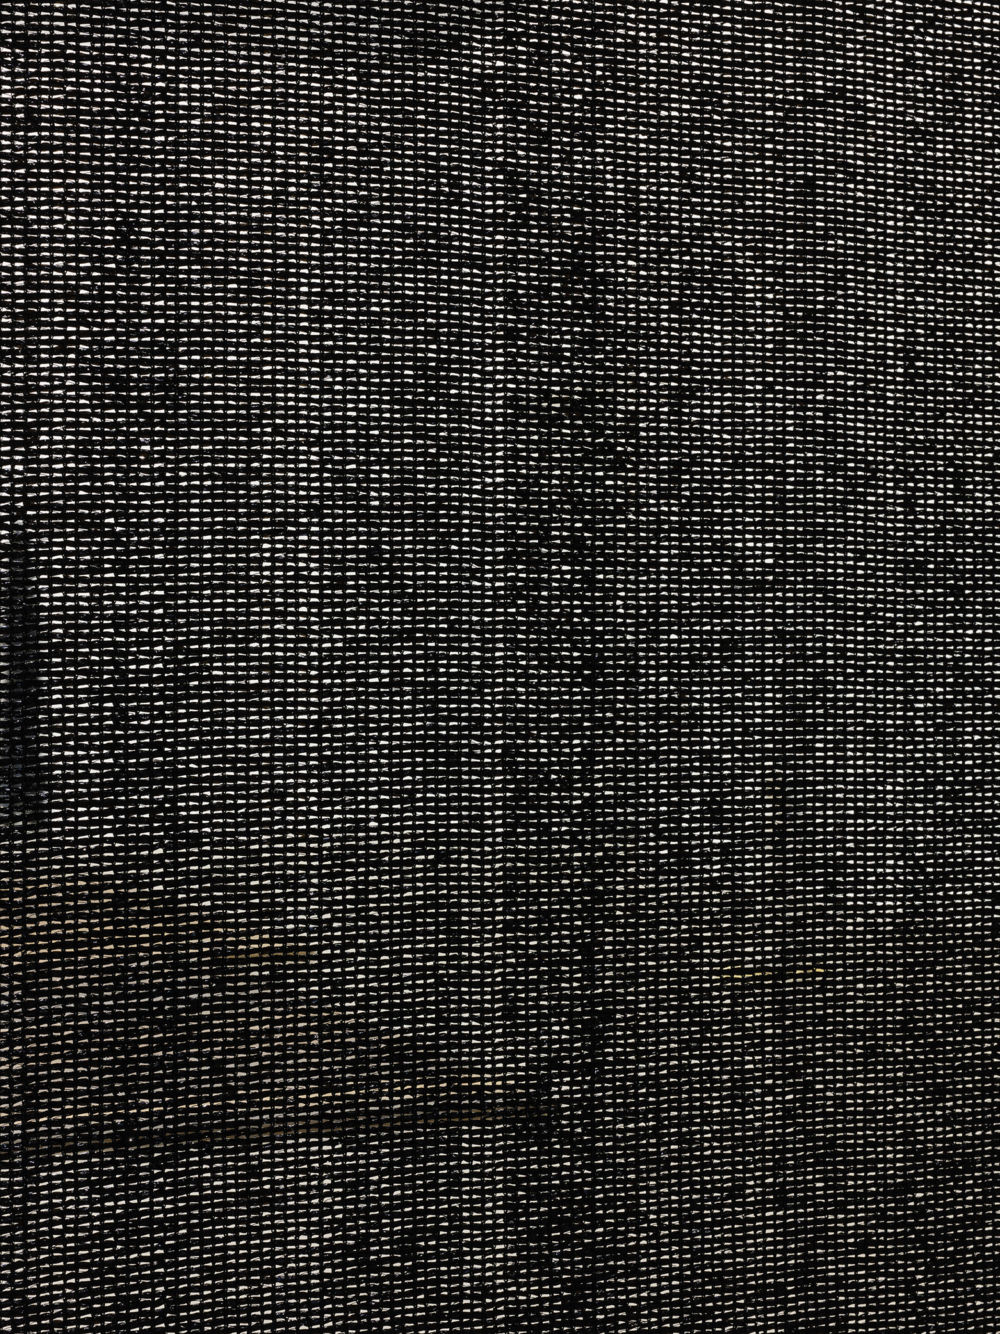 Kapwani Kiwanga, Untitled (Pasquart 1) (detail), 2020, steel, wood, shade cloth, epoxy paint, 118 x 47 x 2 in. (300 x 120 x 5 cm) by 